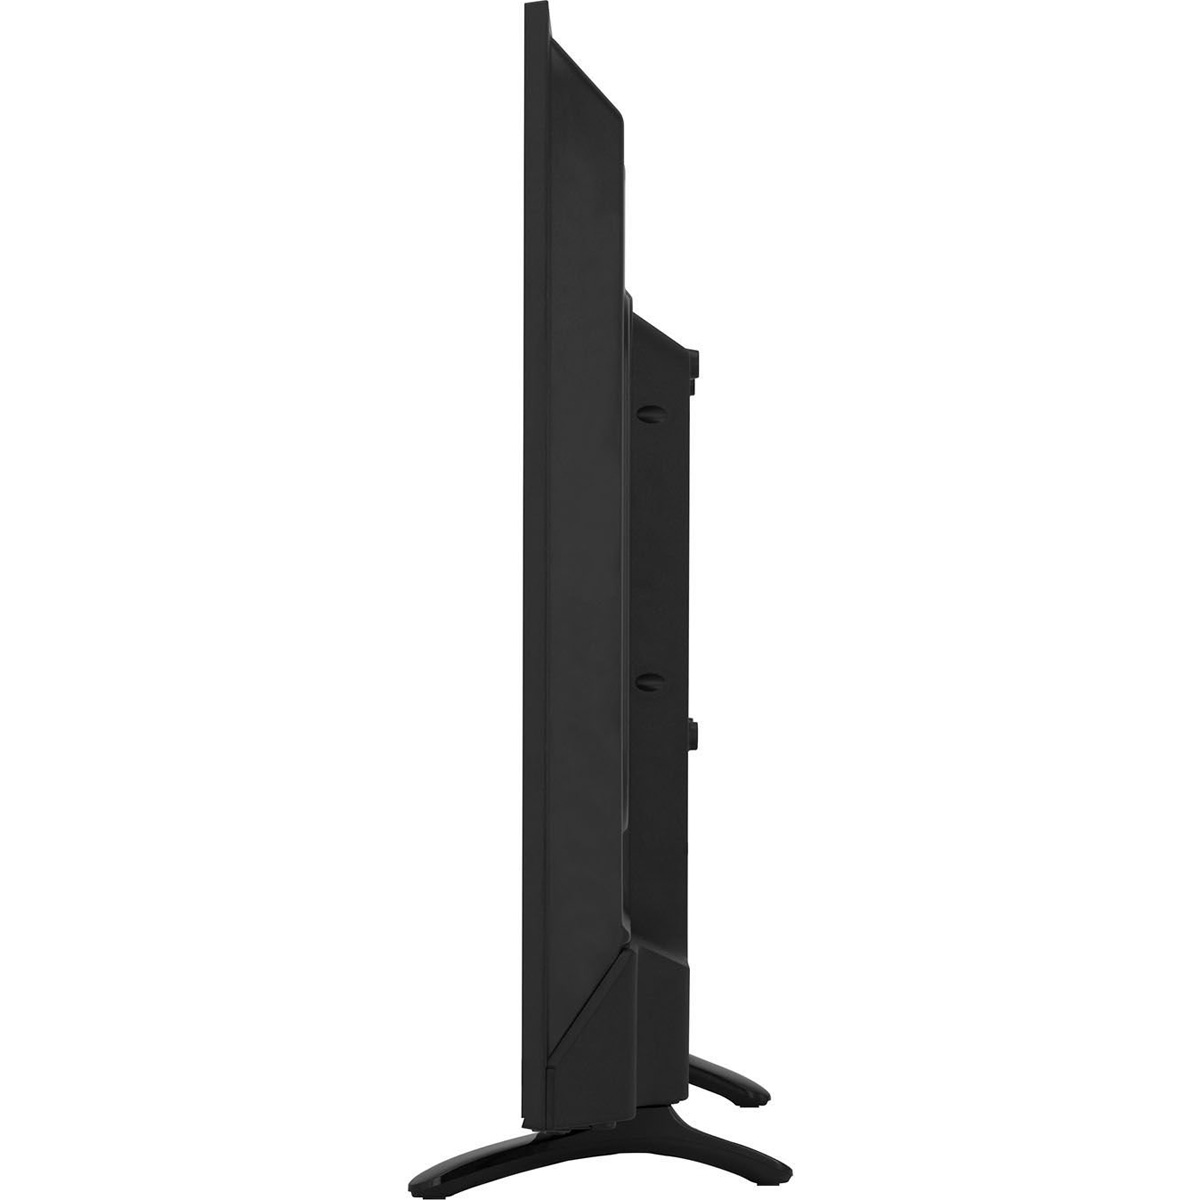 Sharp 50" Class FHD (1080p) LED TV (LC-50N3100U) - image 4 of 5